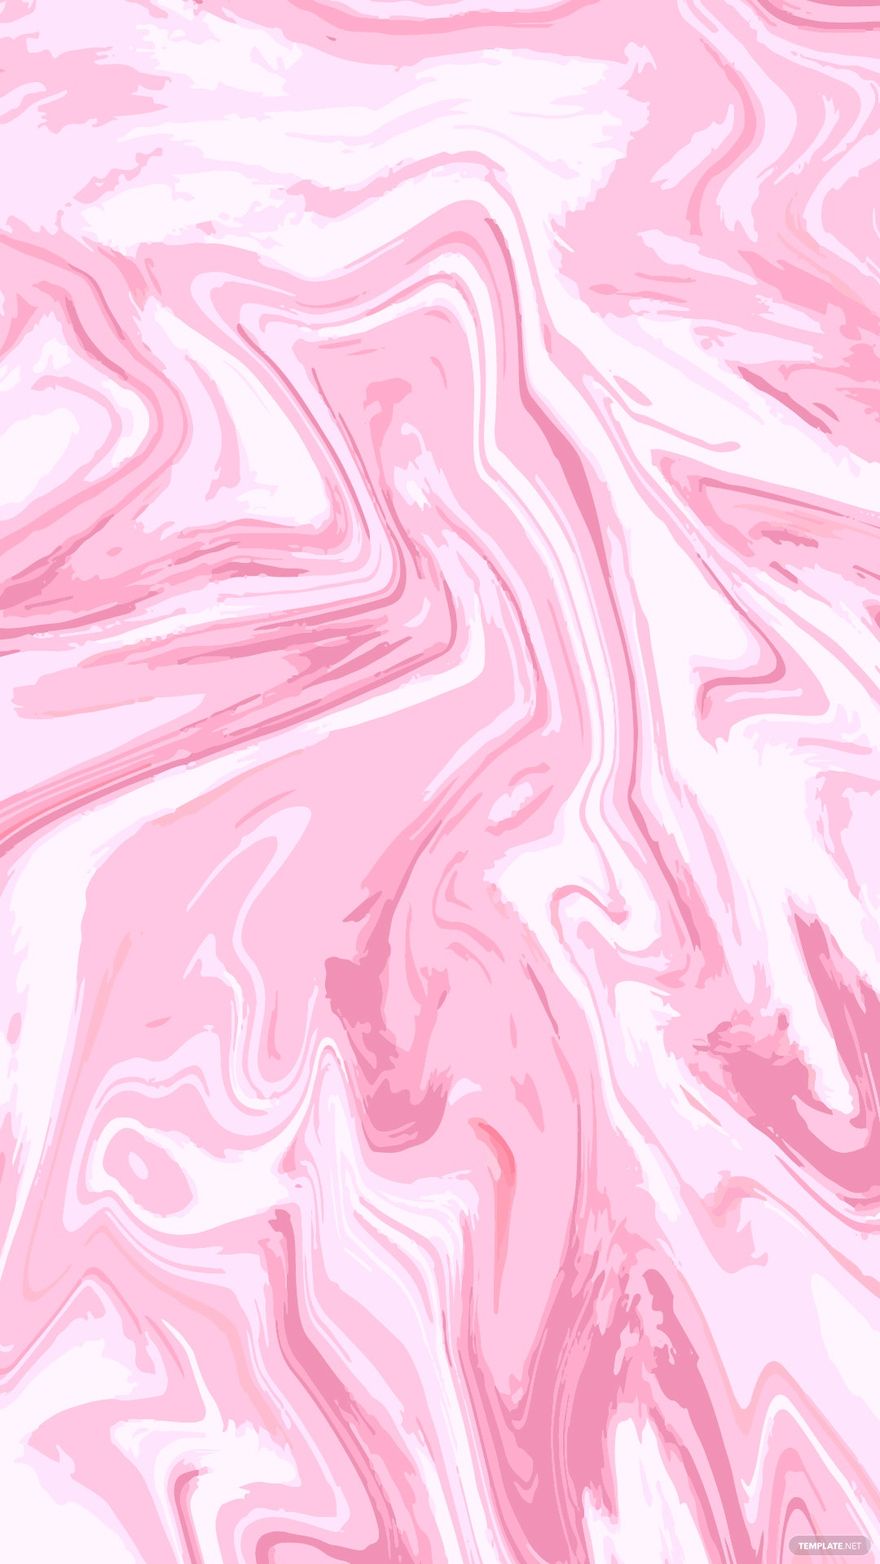 Pink Marble iPhone Background in Illustrator, JPG, EPS, SVG - Download ...